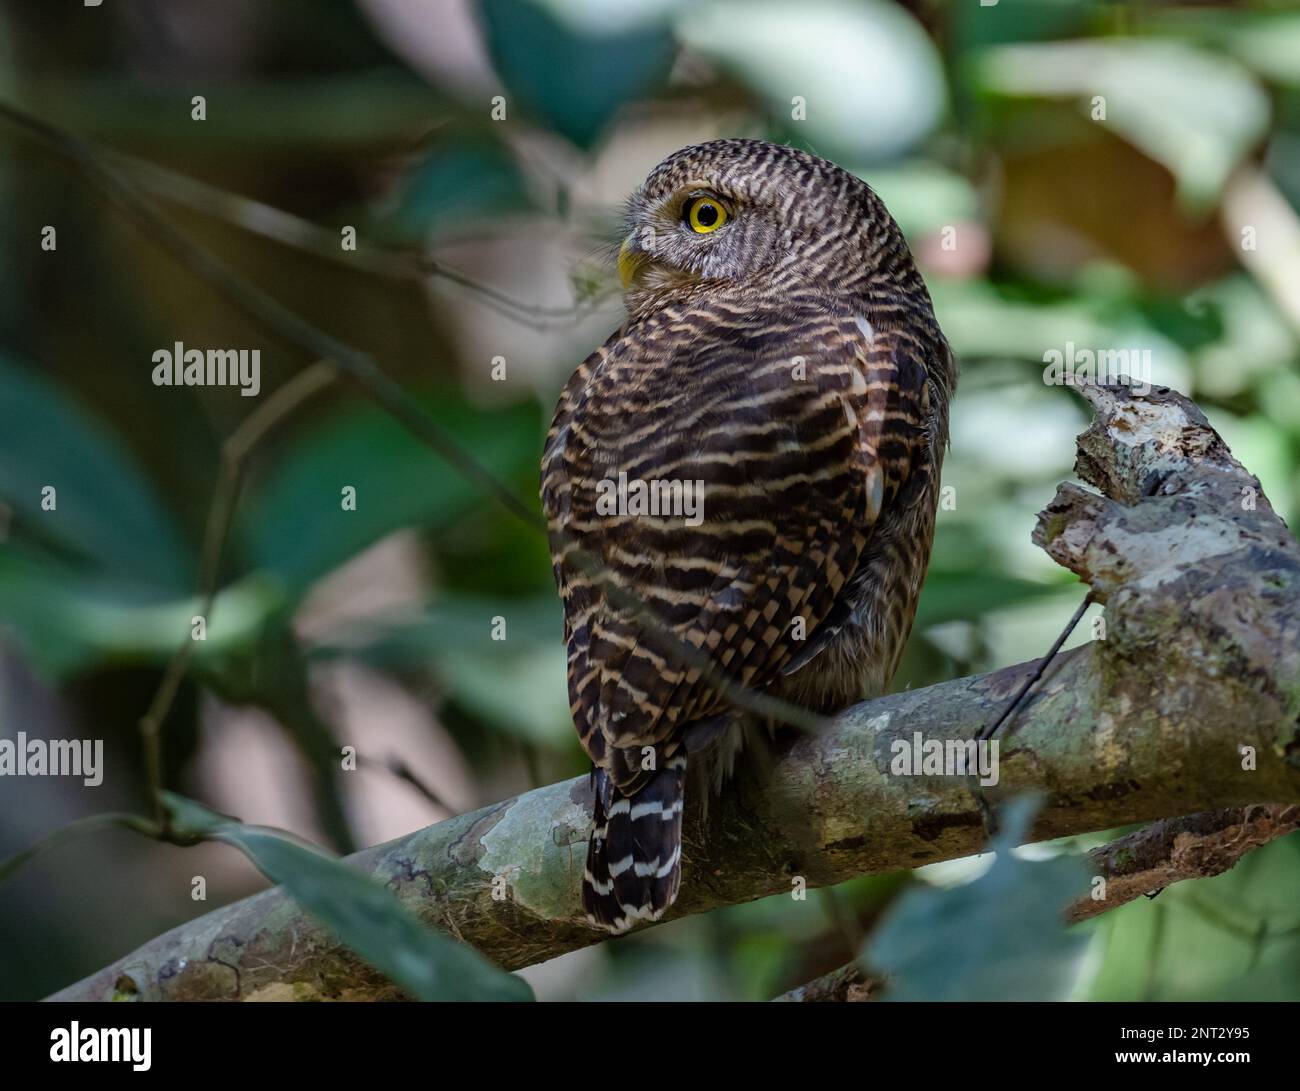 An Asian Barred Owlet (Glaucidium cuculoides) perched on a branch. Thailand. Stock Photo